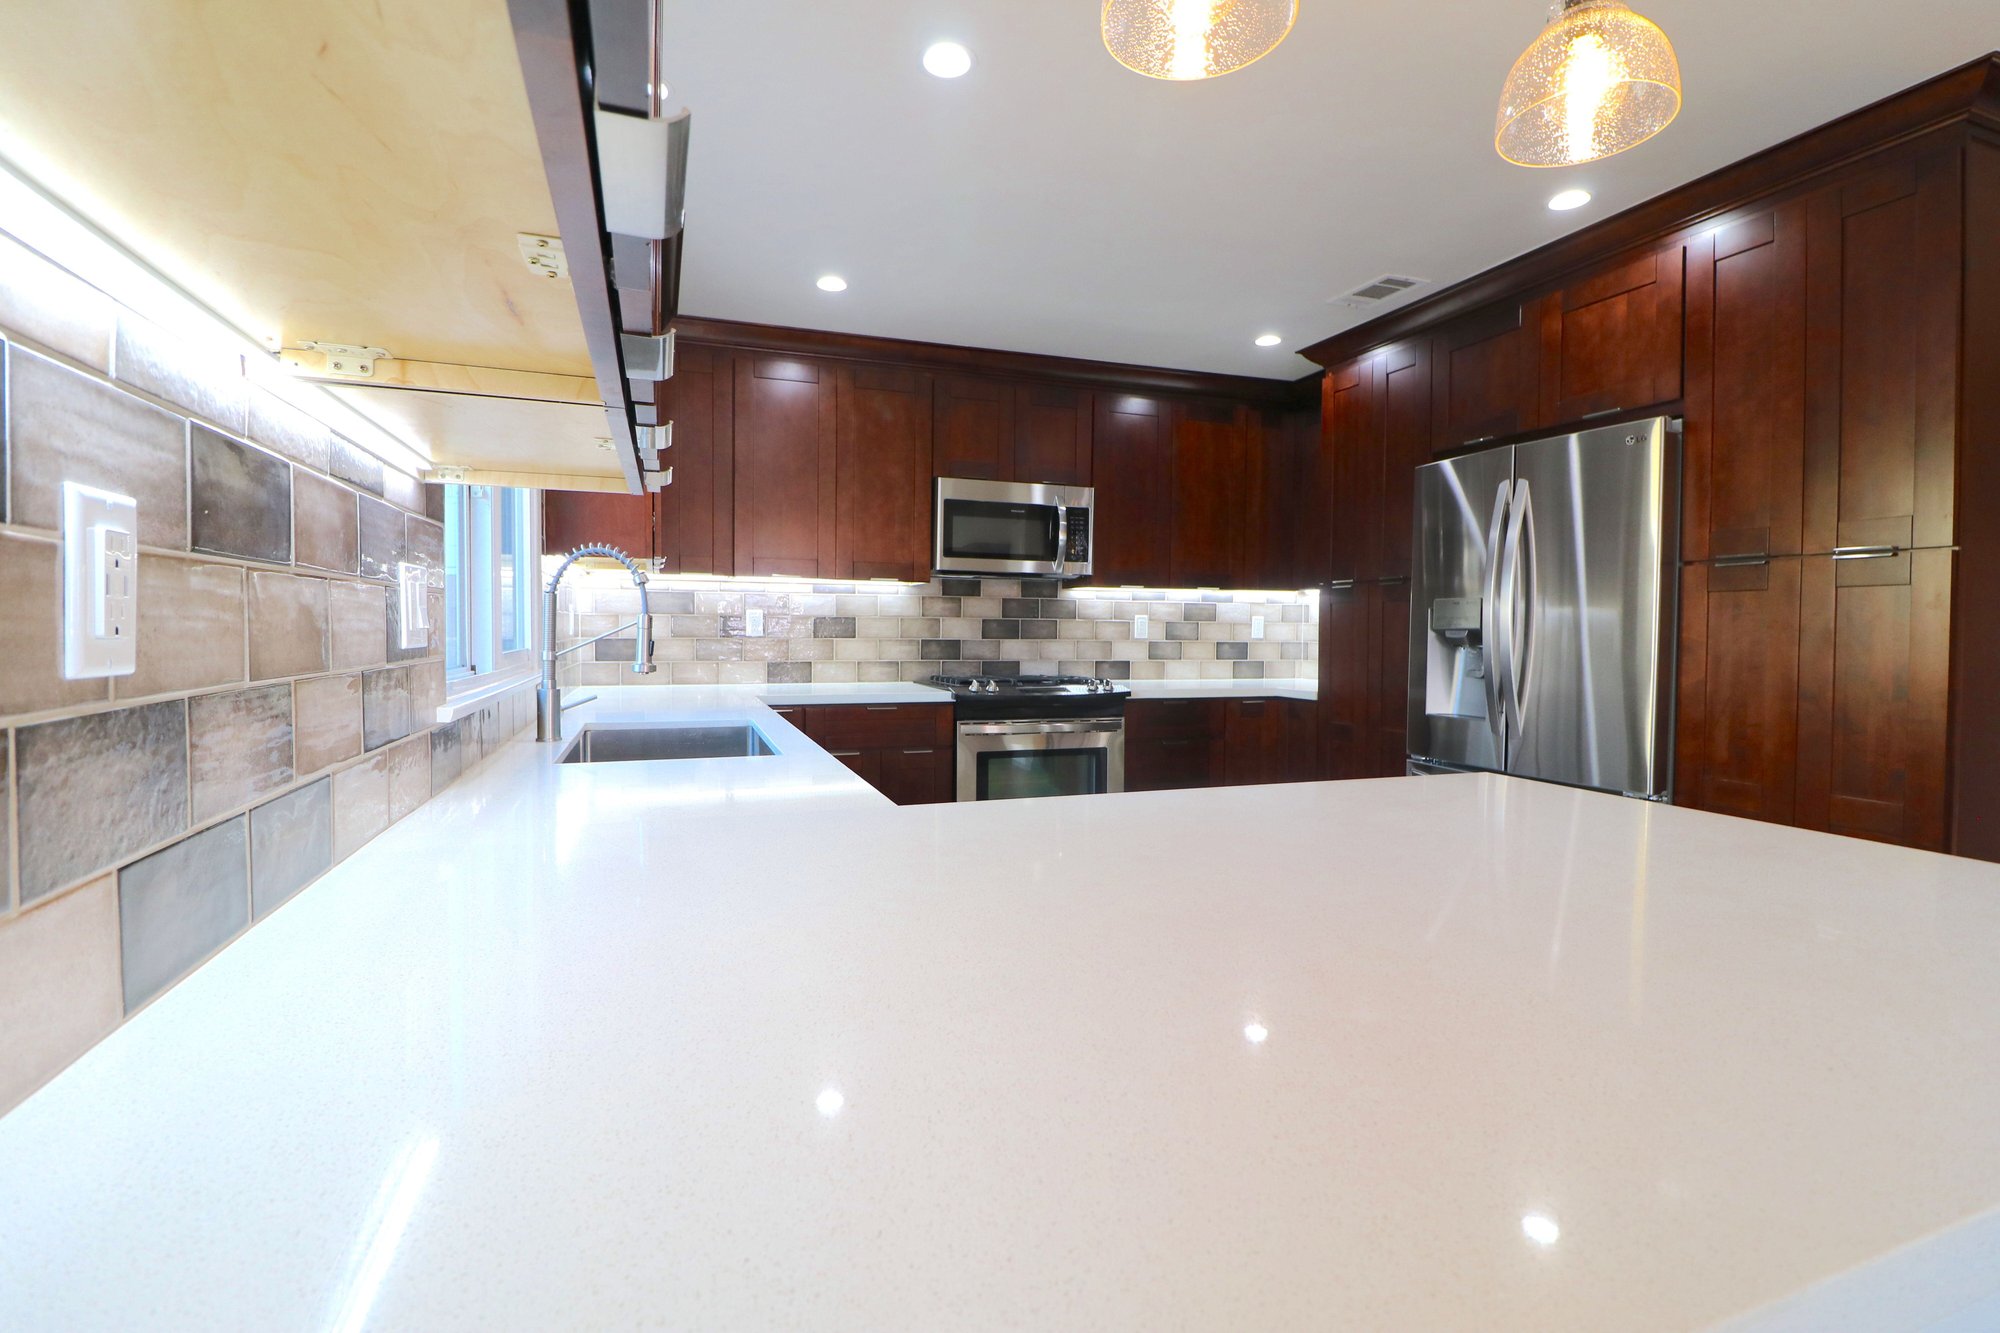 Redondo Beach Kitchen - best general contractor - quartz countertop peninsula